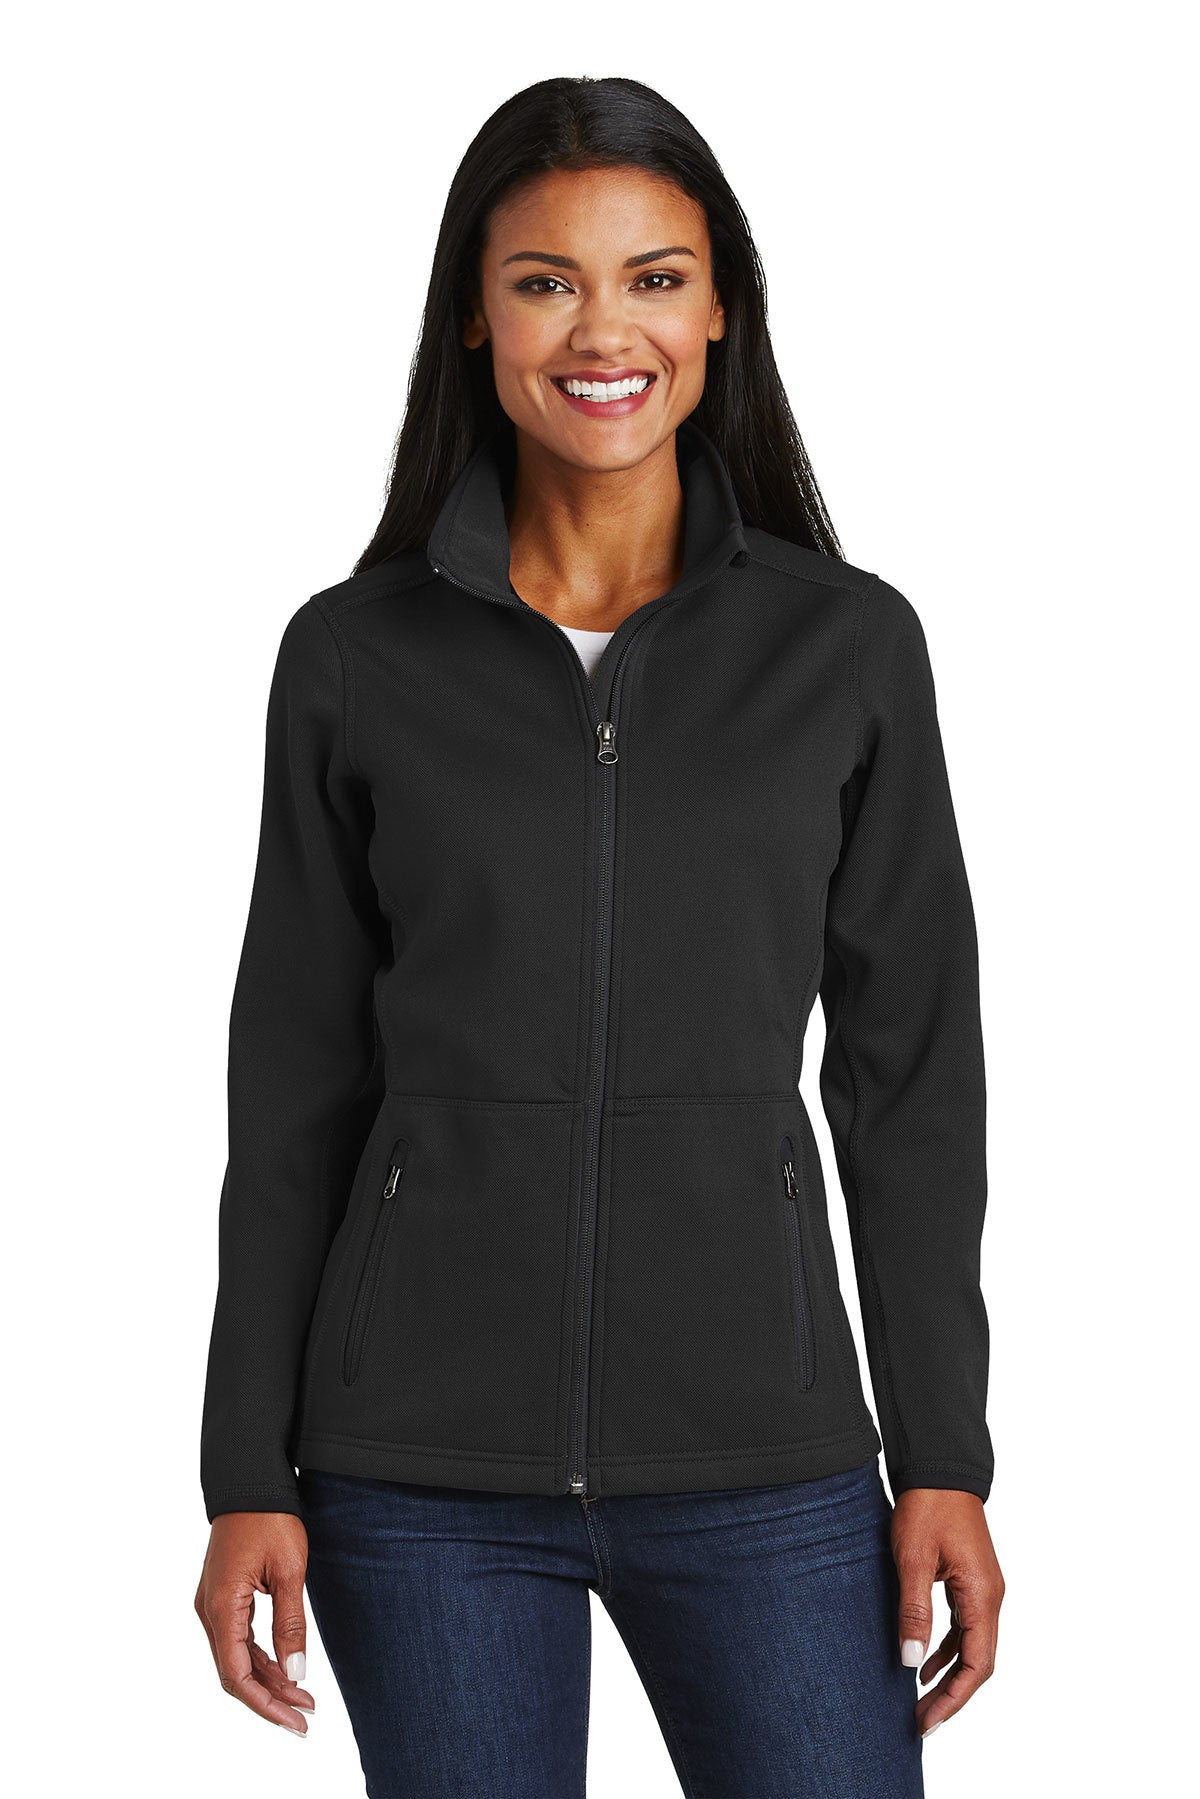 PA L222 Women's Pique Fleece Jacket Black 